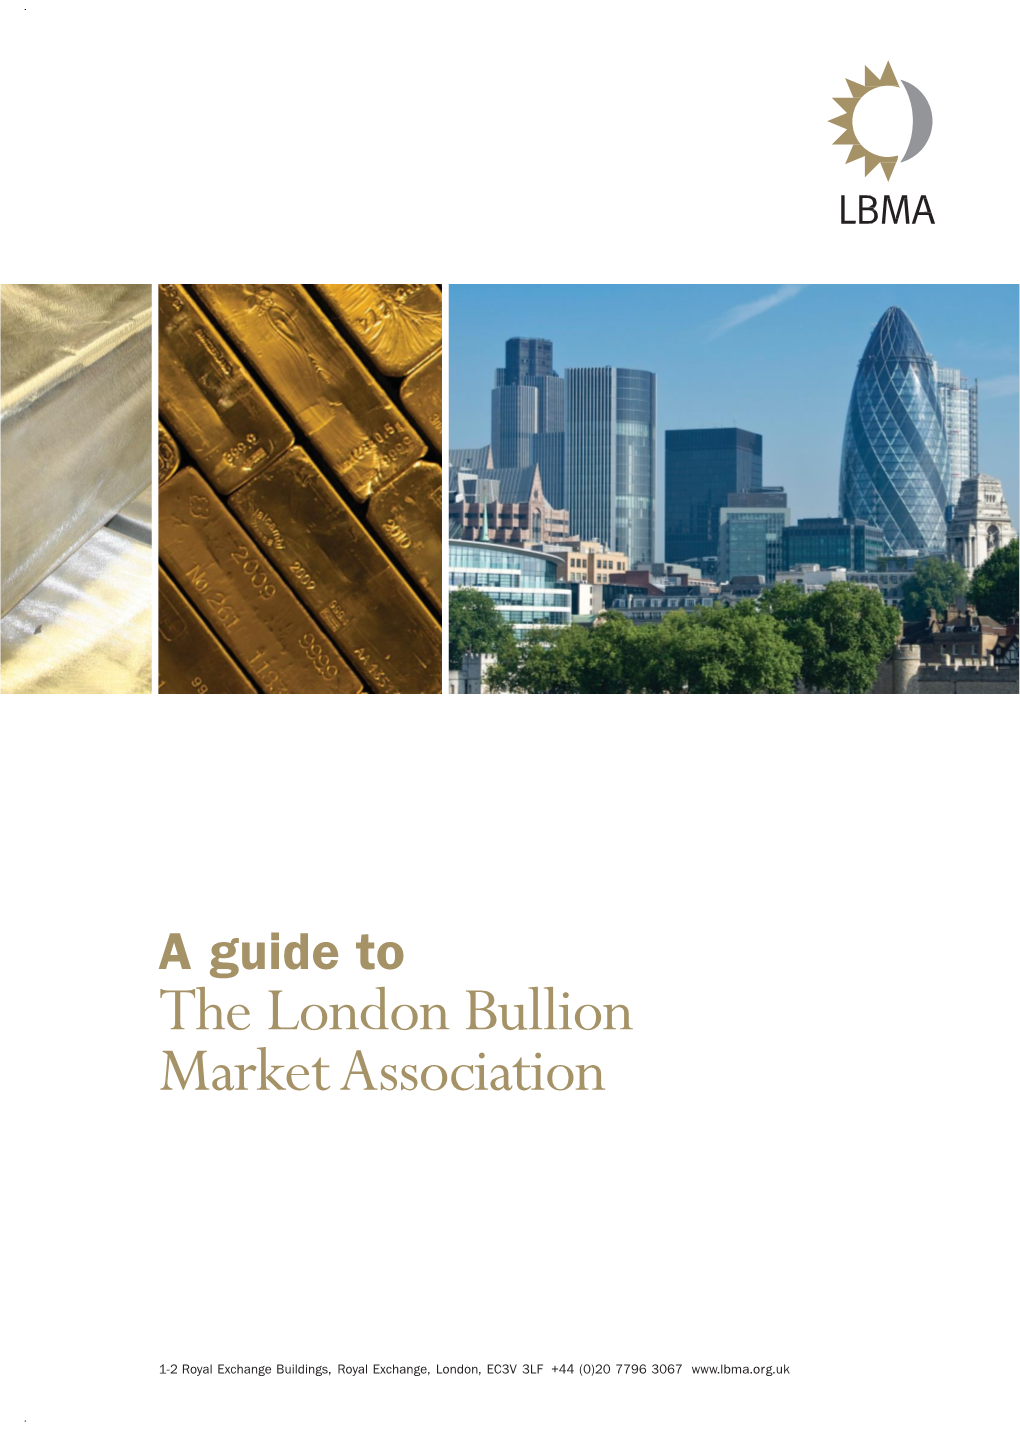 A Guide to the London Bullion Market Association